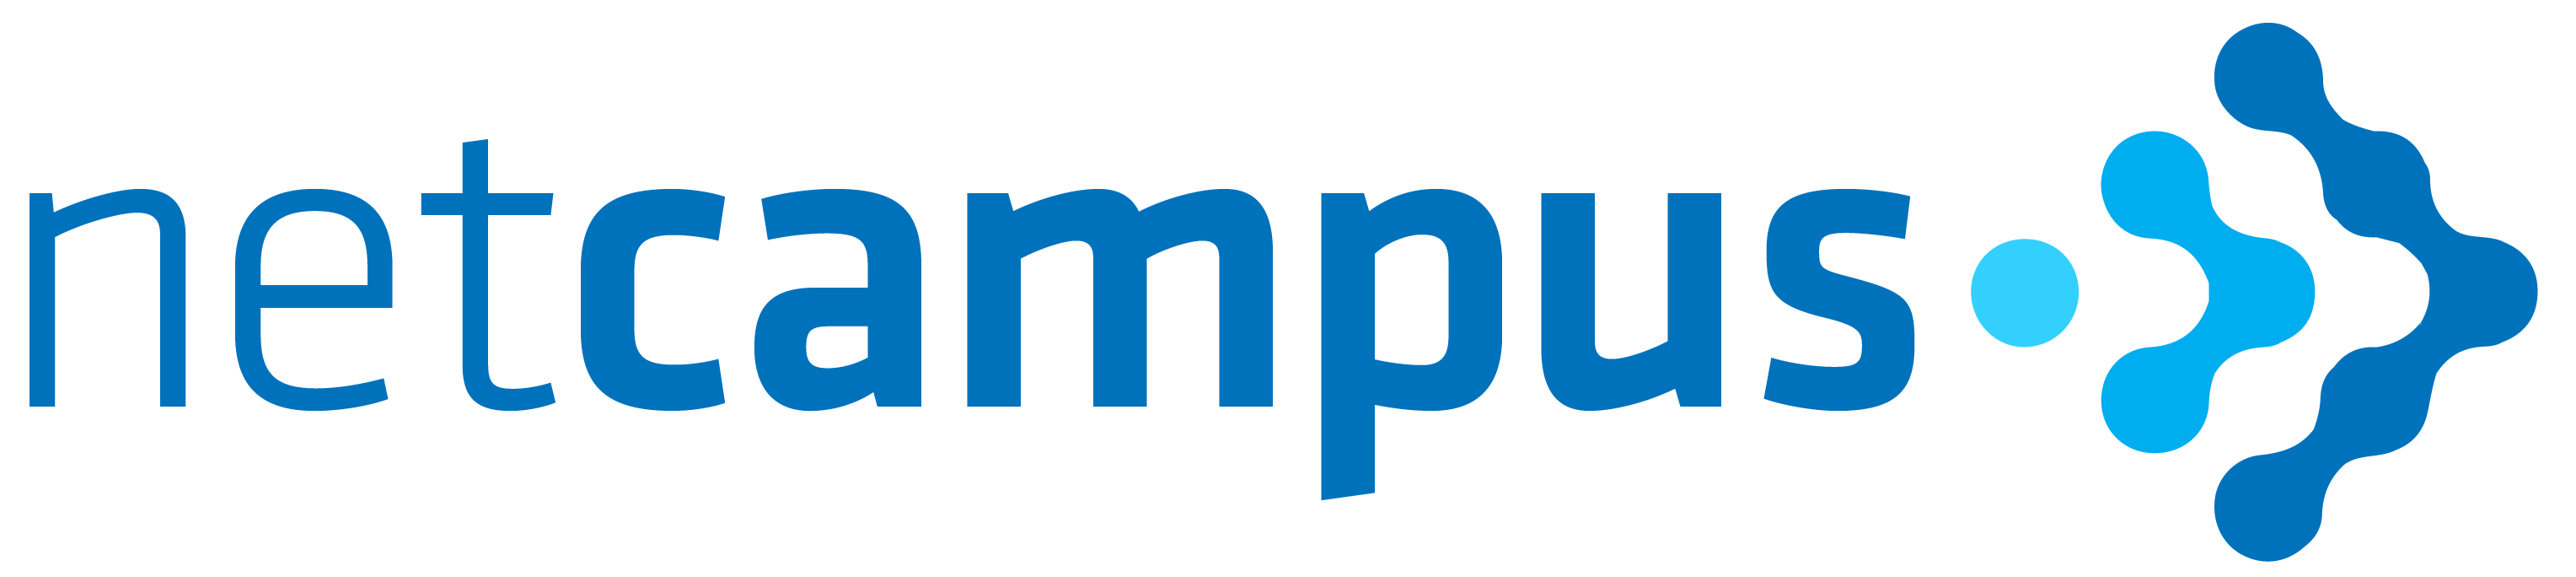 NetCampus